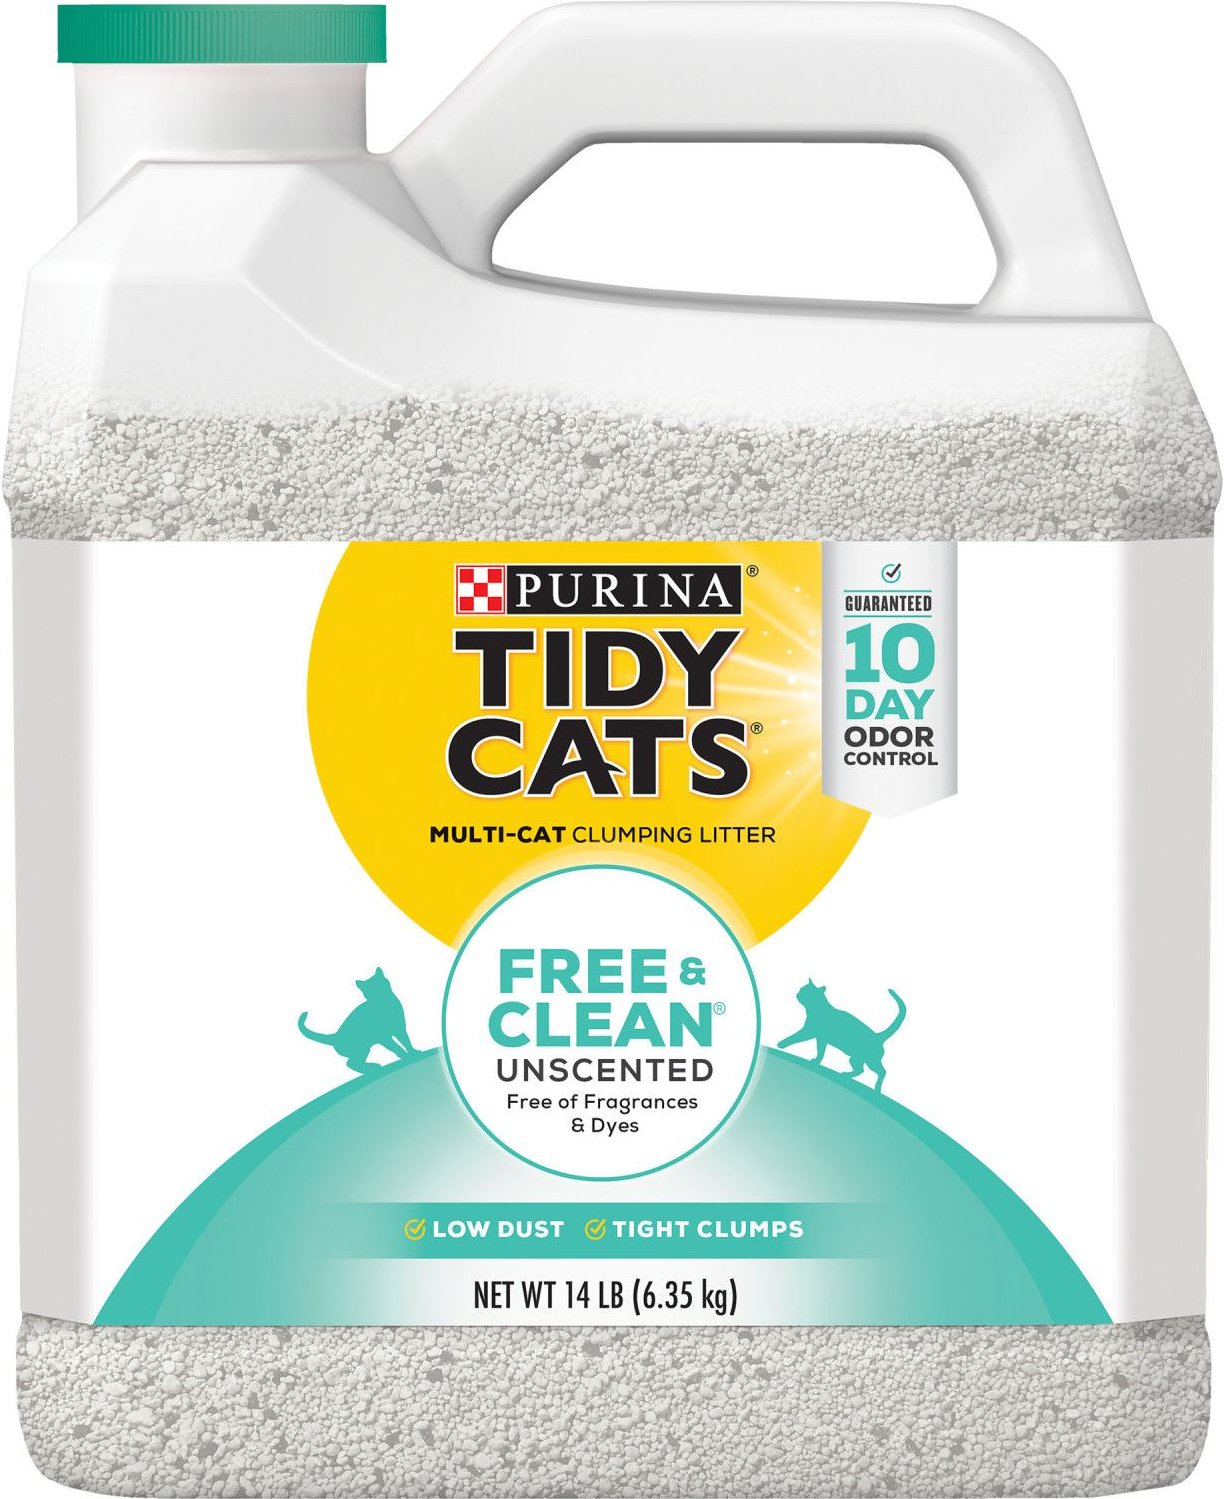 tidy cats dust free litter